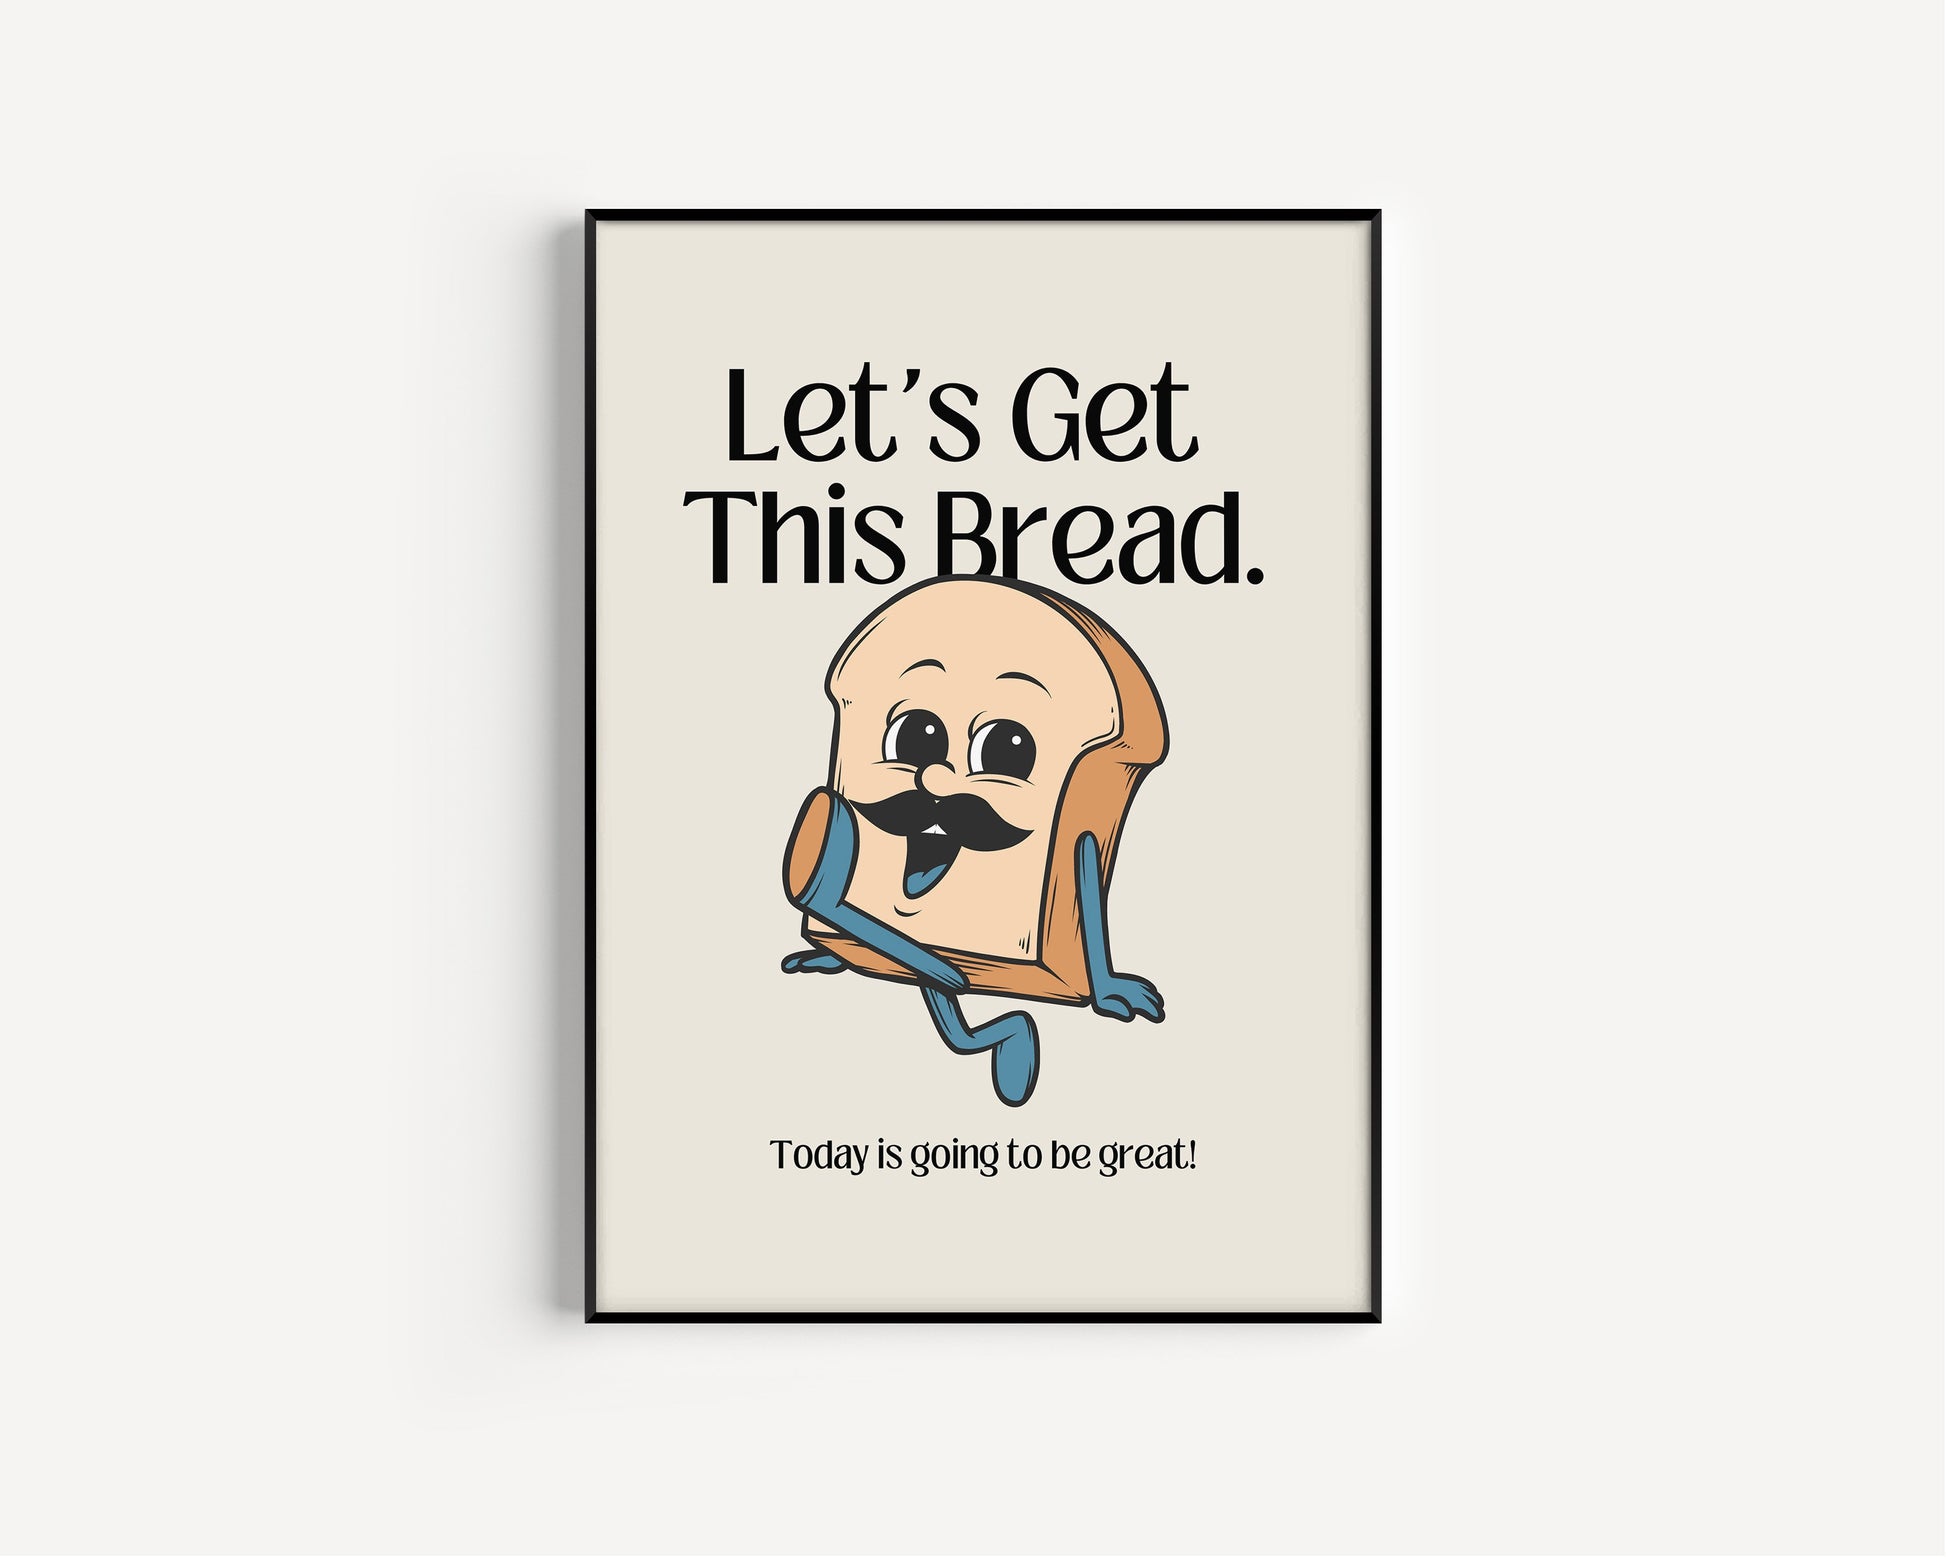 Retro Character Print, Let's Get This Bread, Motivational Kitchen Wall Art, Kitchen Prints, Retro Poster, Retro Wall Decor, Vintage Prints